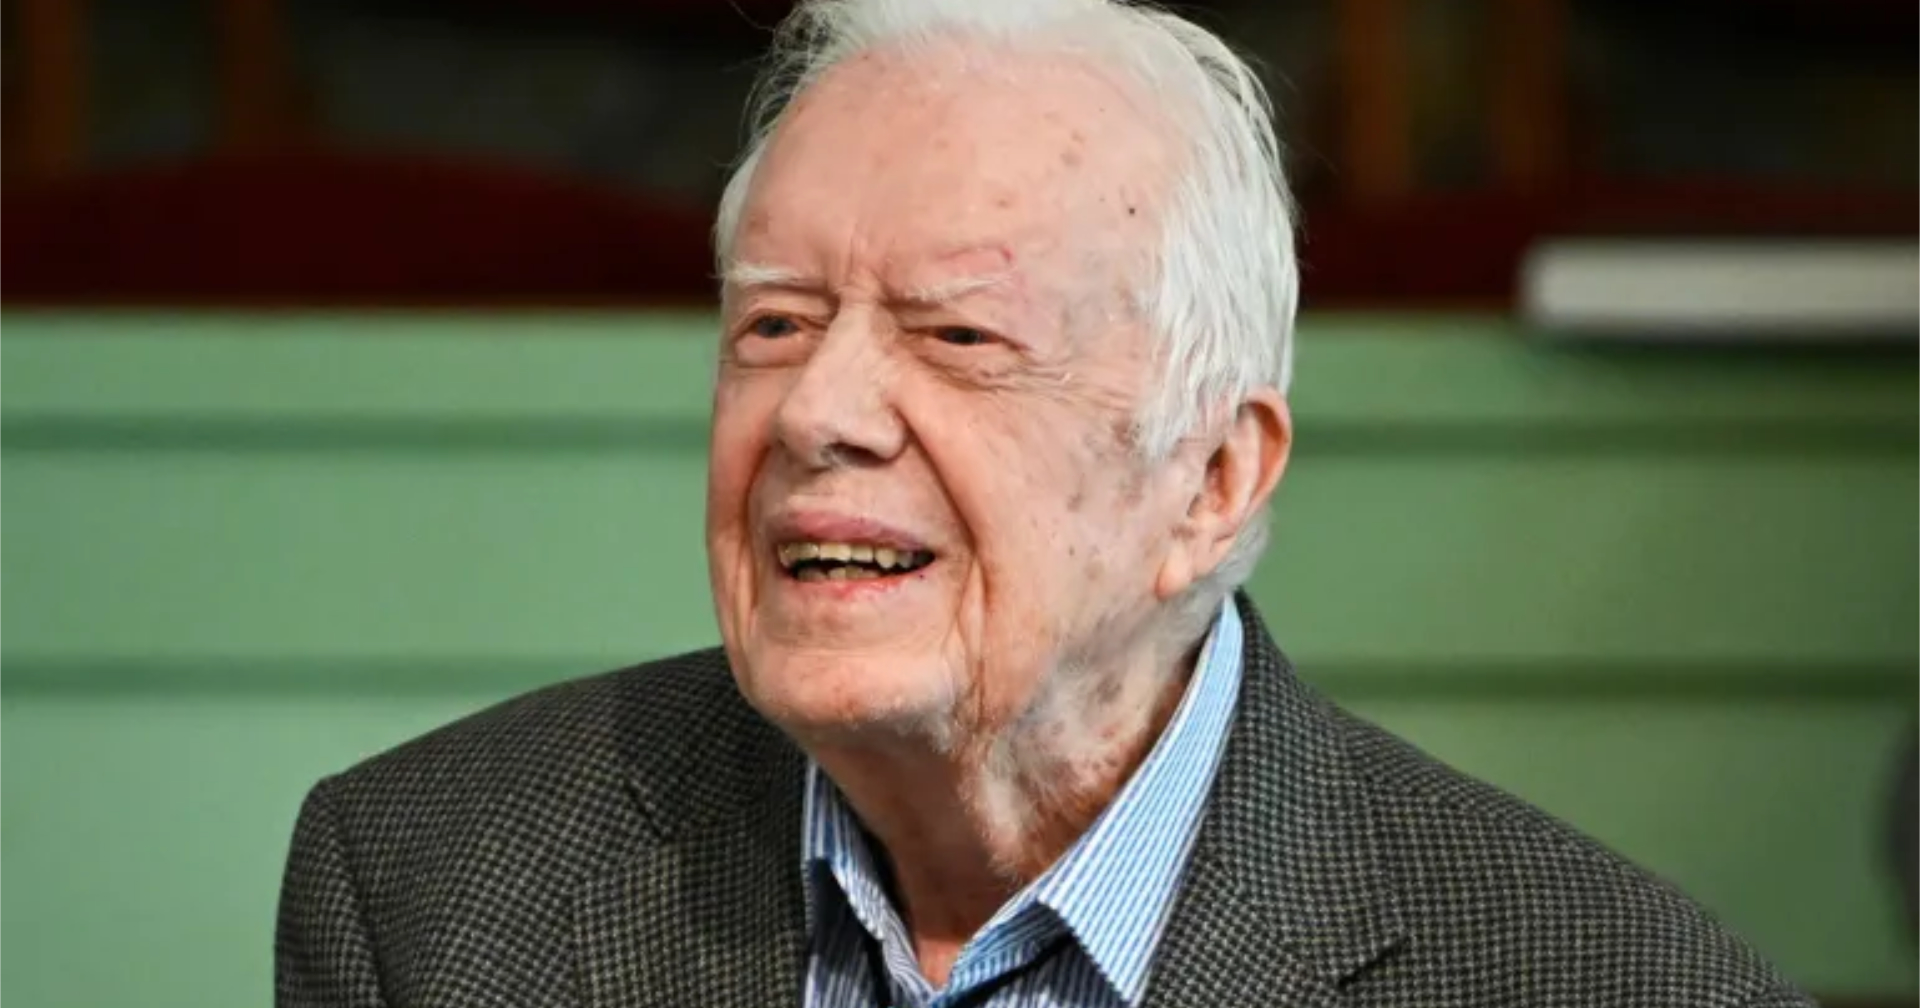 Jimmy Carter ออกจากโรงพยาบาลแล้ว ขอใช้ช่วงเวลาสุดท้ายกับครอบครัว